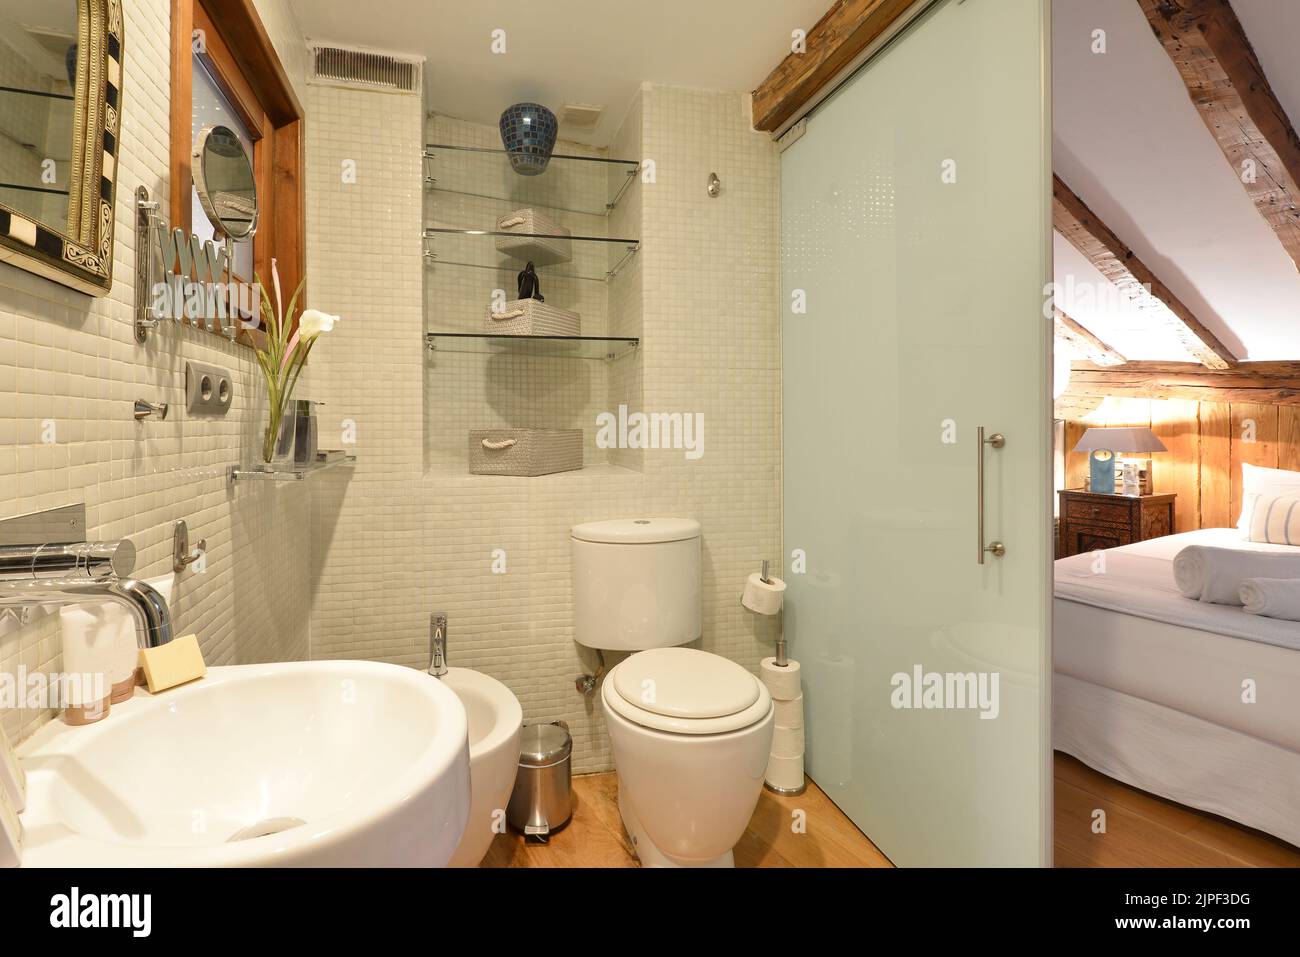 En-suite bathroom with tiled tiles, translucent glass sliding door and white porcelain design toilets Stock Photo